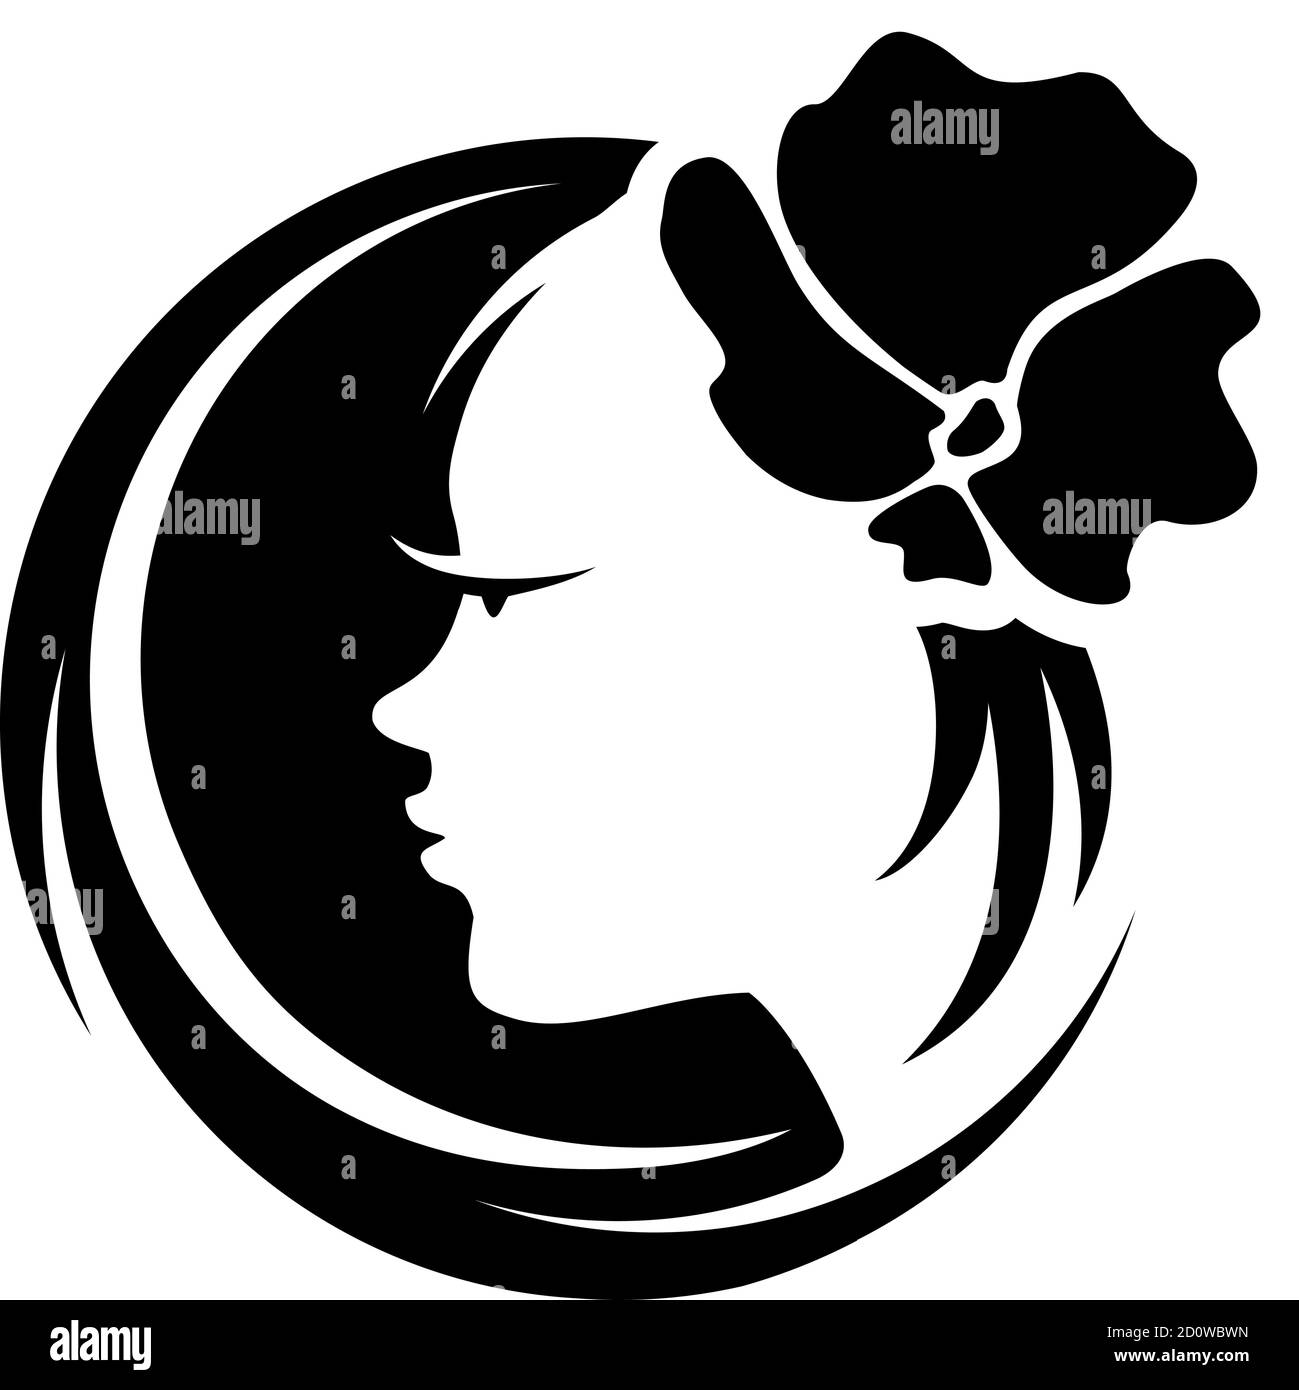 Beauty logo Black and White Stock Photos & Images - Alamy